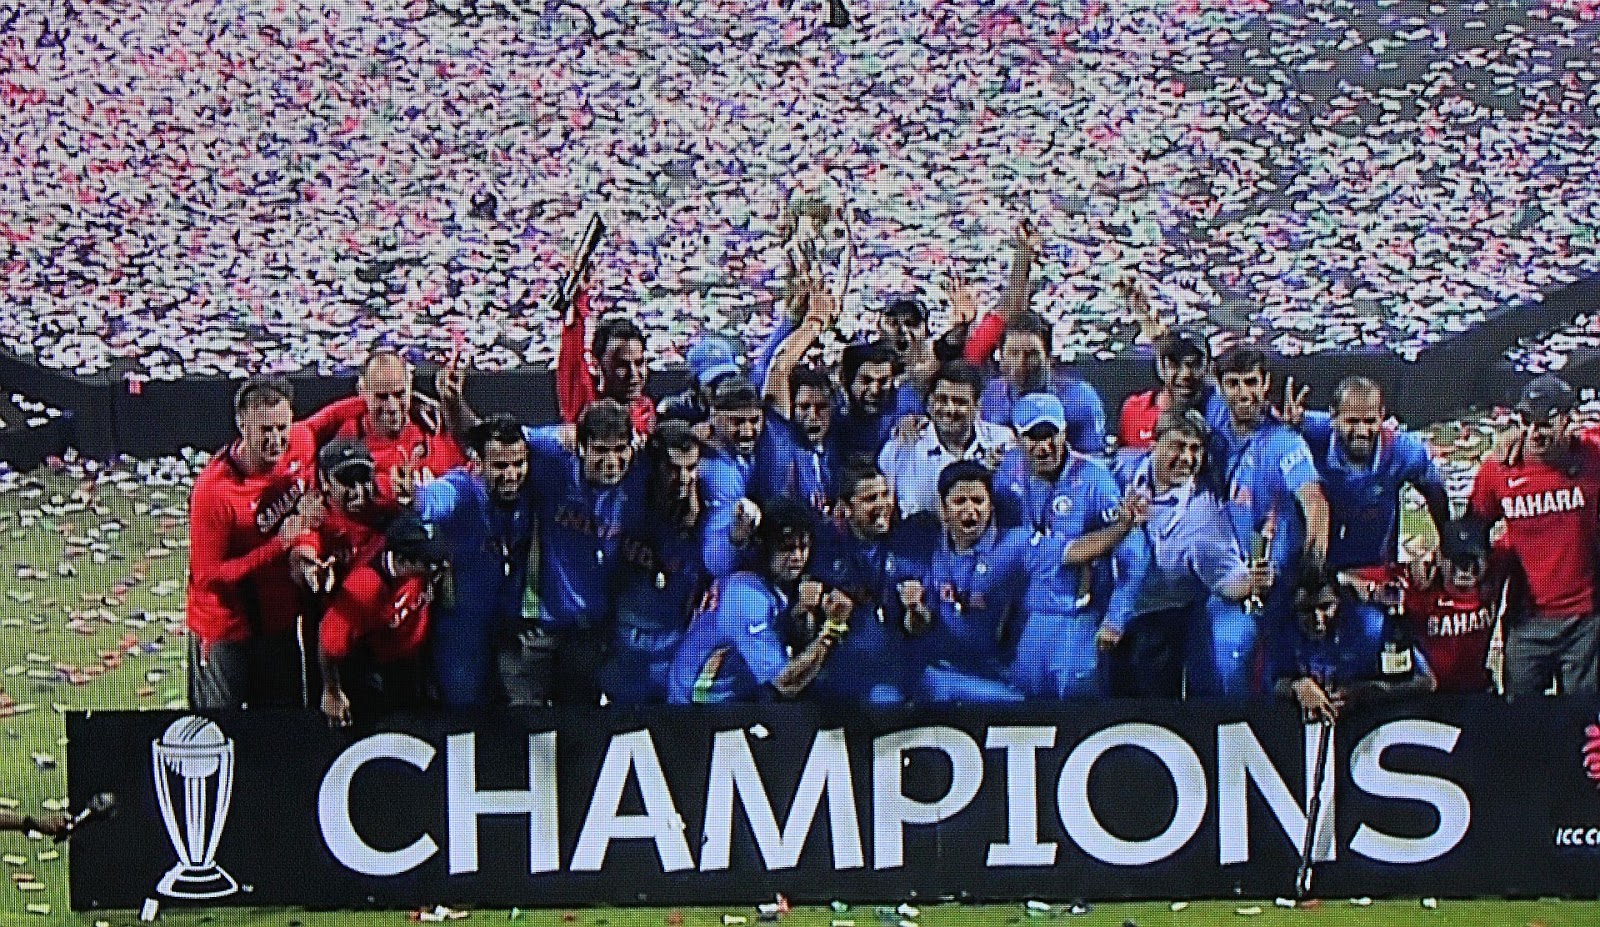 MZANSINDABA INDIA'S WIN OF 2011 ICC CRICKET WORLD CUP IS MZANSI'S LESSON